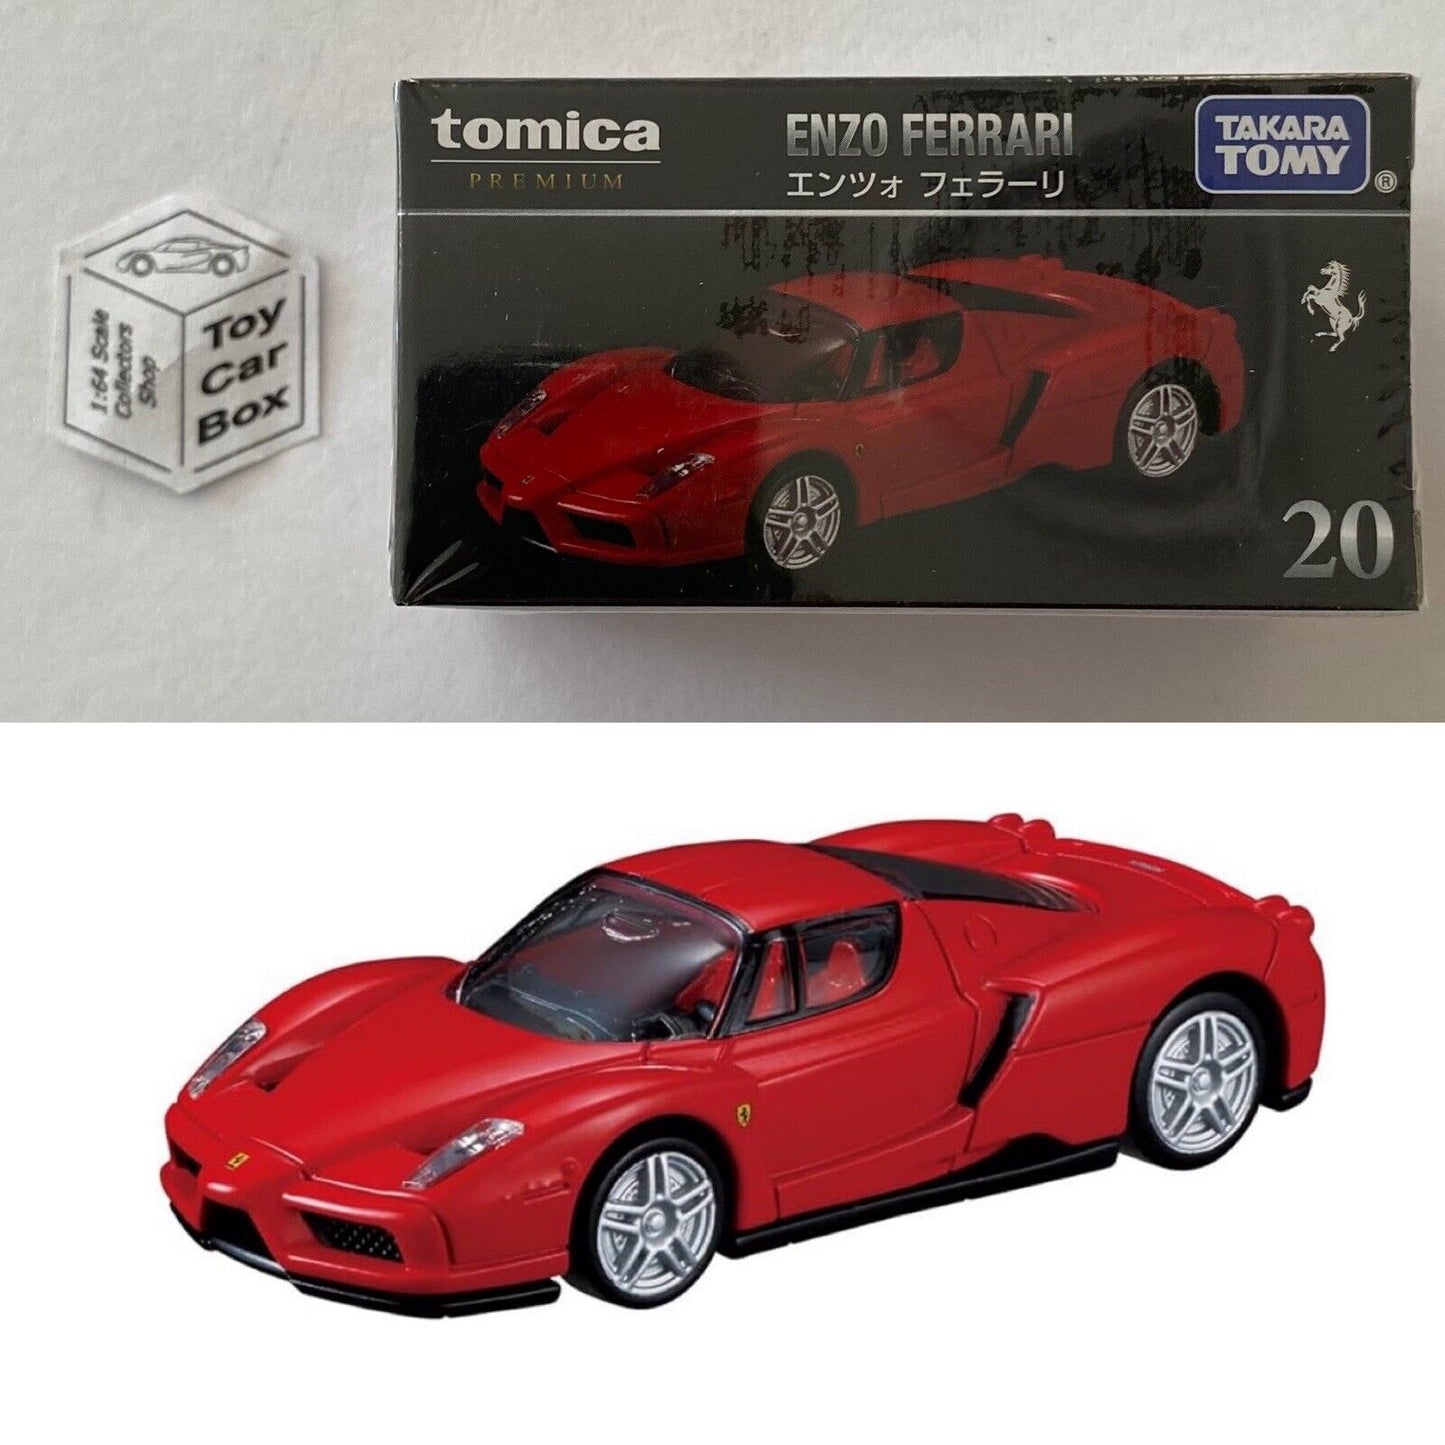 TOMICA Premium #20 - Enzo Ferrari (Red - 1/62 Scale - Sealed Box) J10